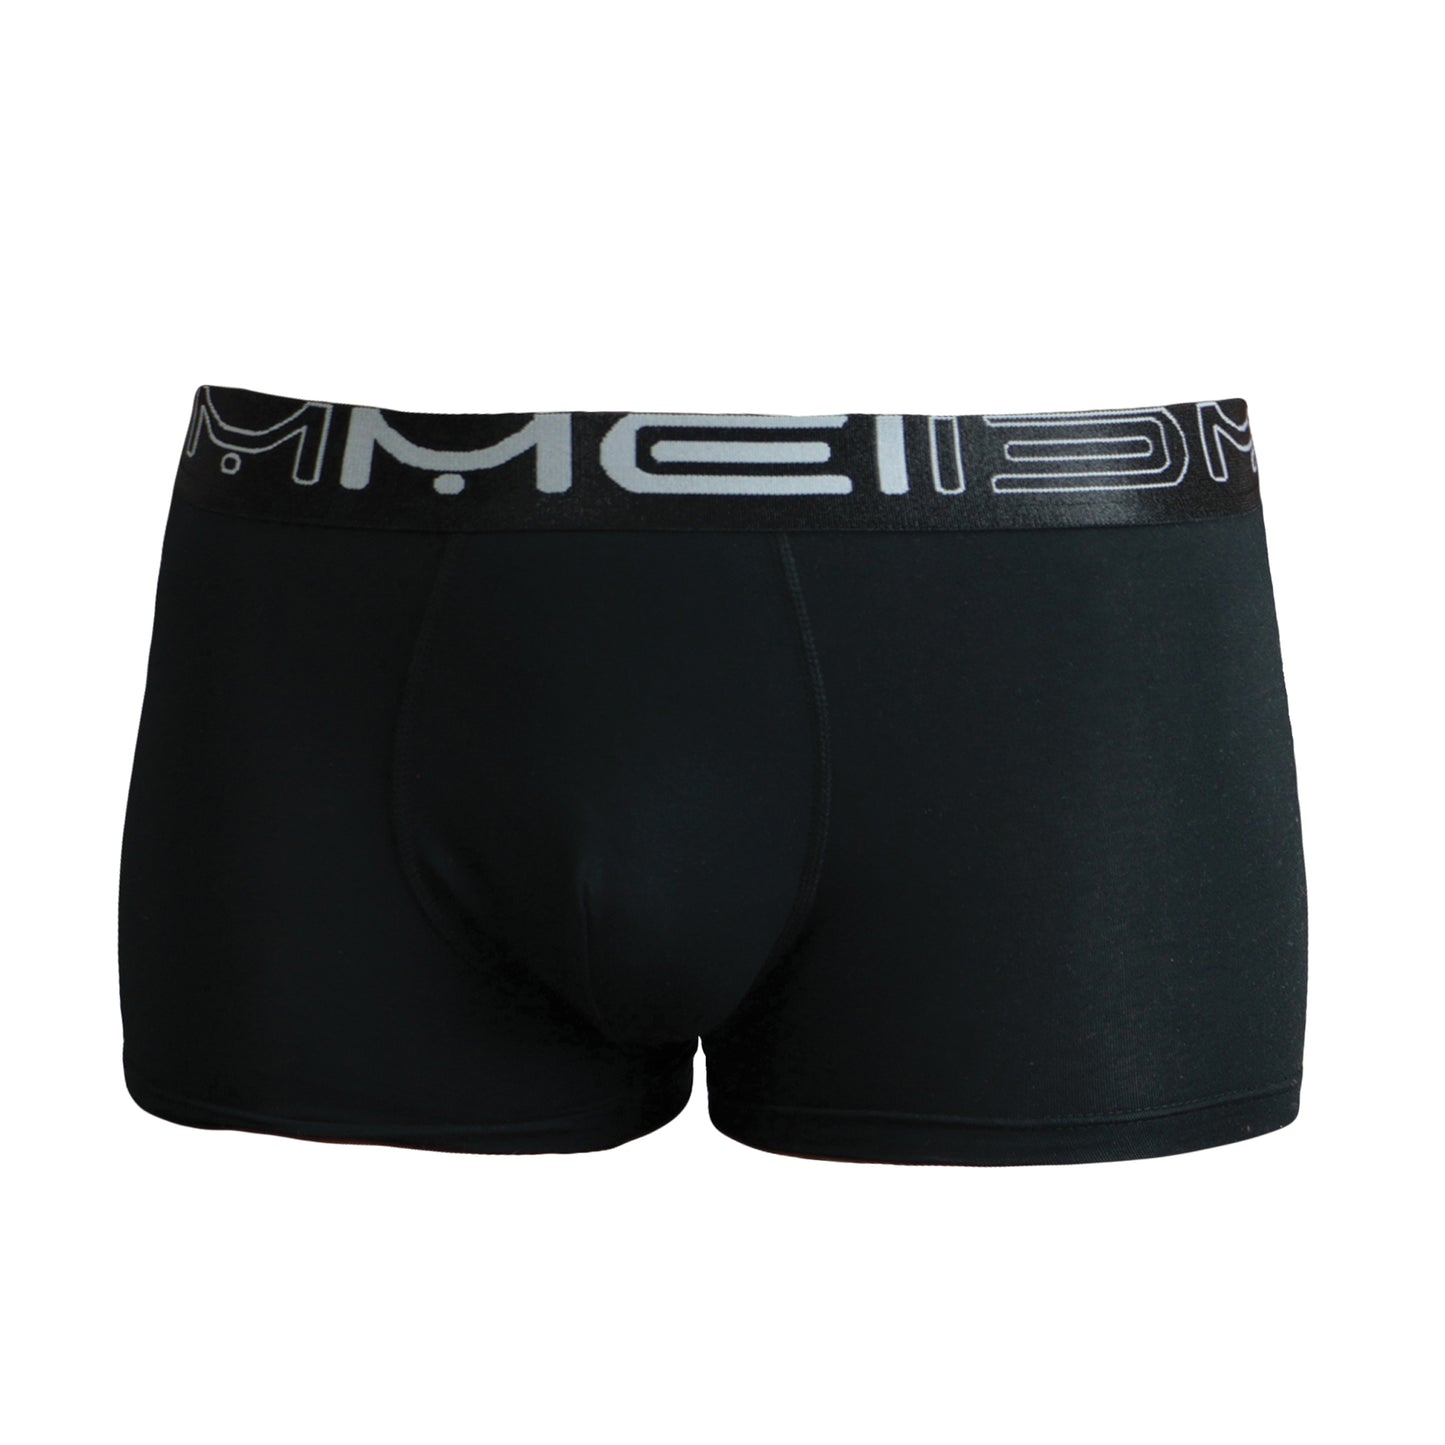 Boxer Underwear 1 piece MEI 175